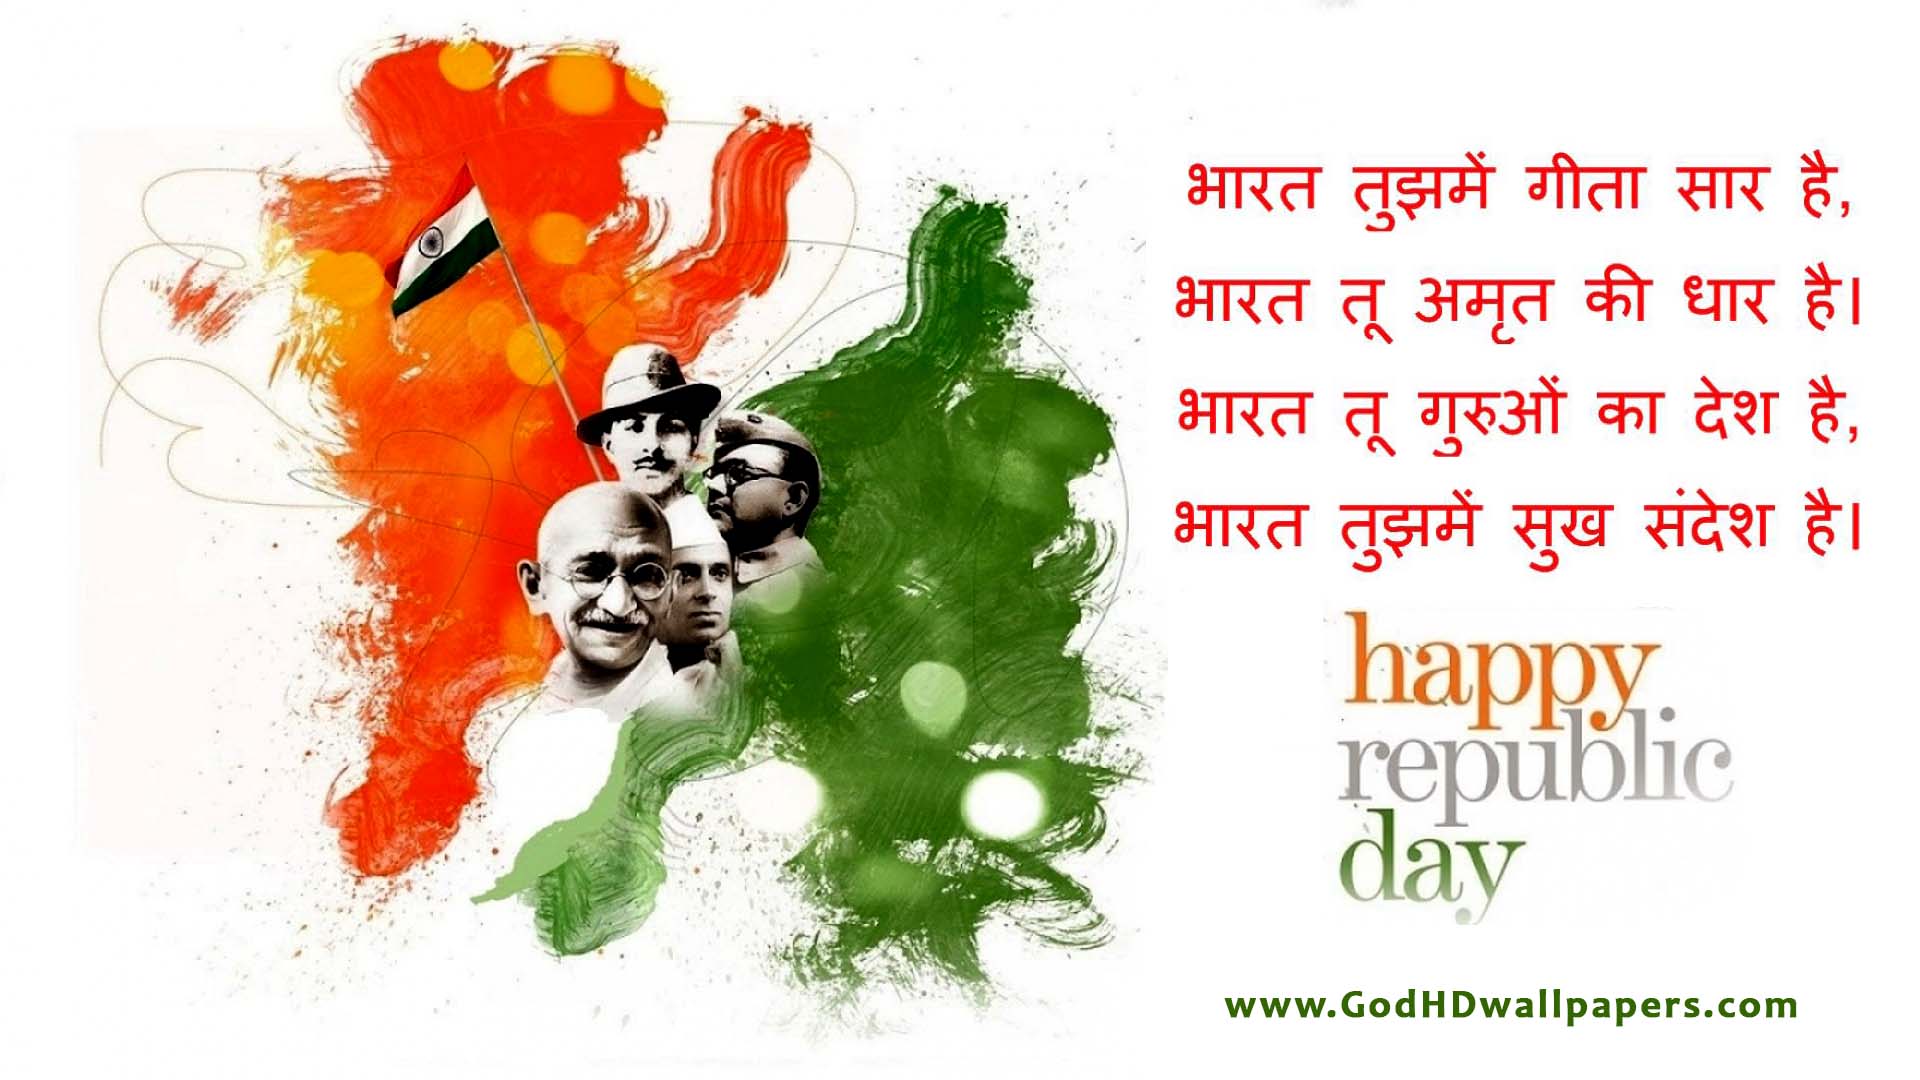 26 January Republic Day Netaji Subash Chandra Bose Picture Wallpapers - God HD  Wallpapers